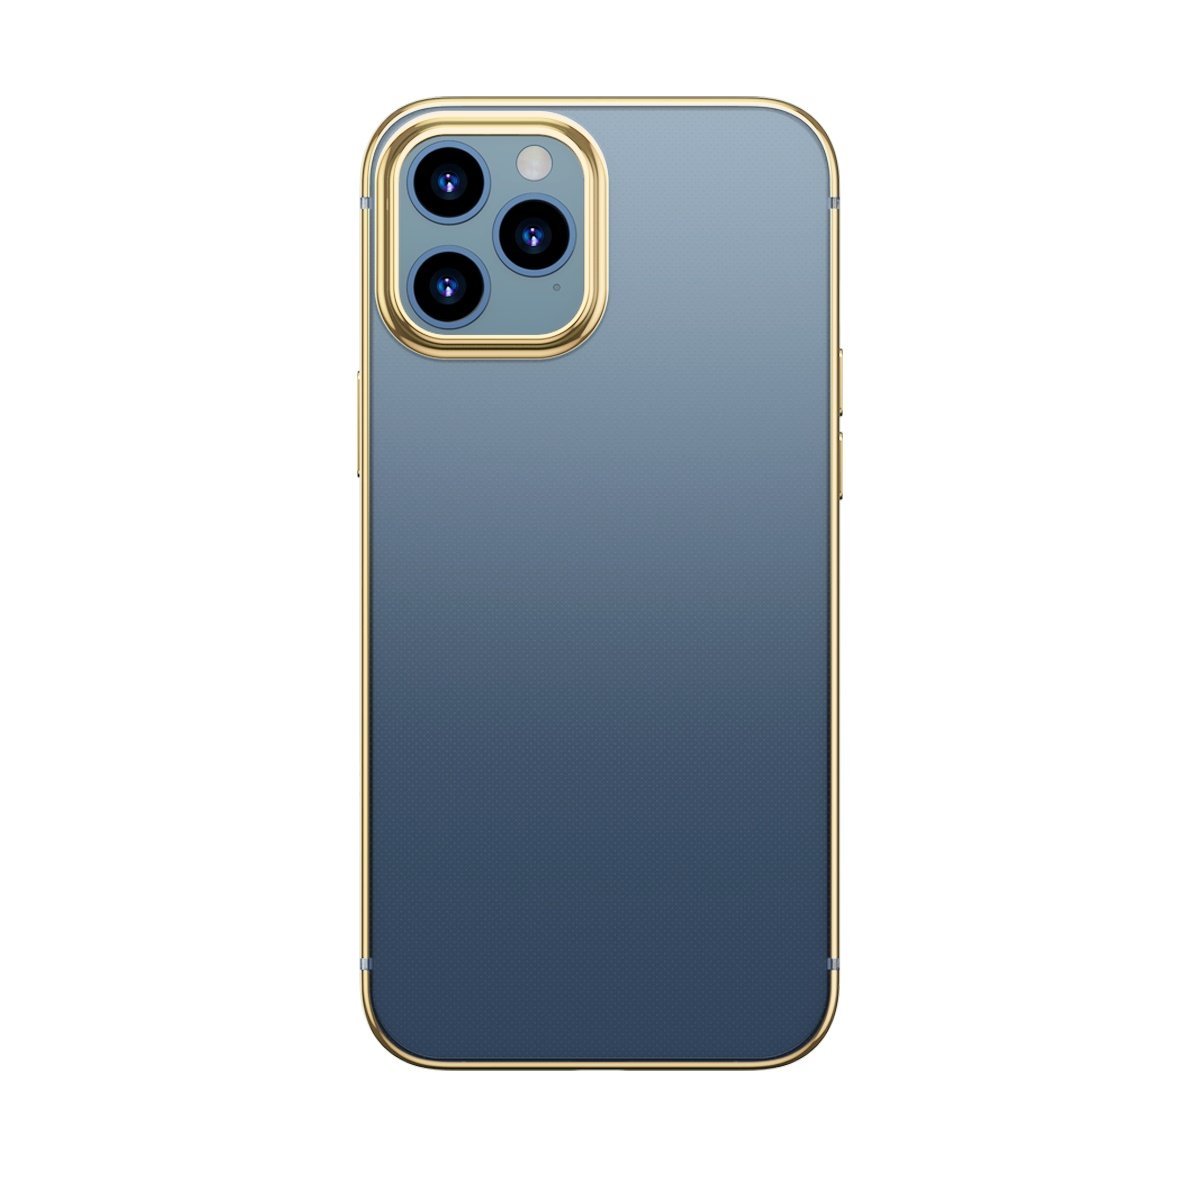 Husa Apple iPhone 12 / 12 Pro, Baseus Shining Case, Transparent / Gold, 6.1 inch imagine